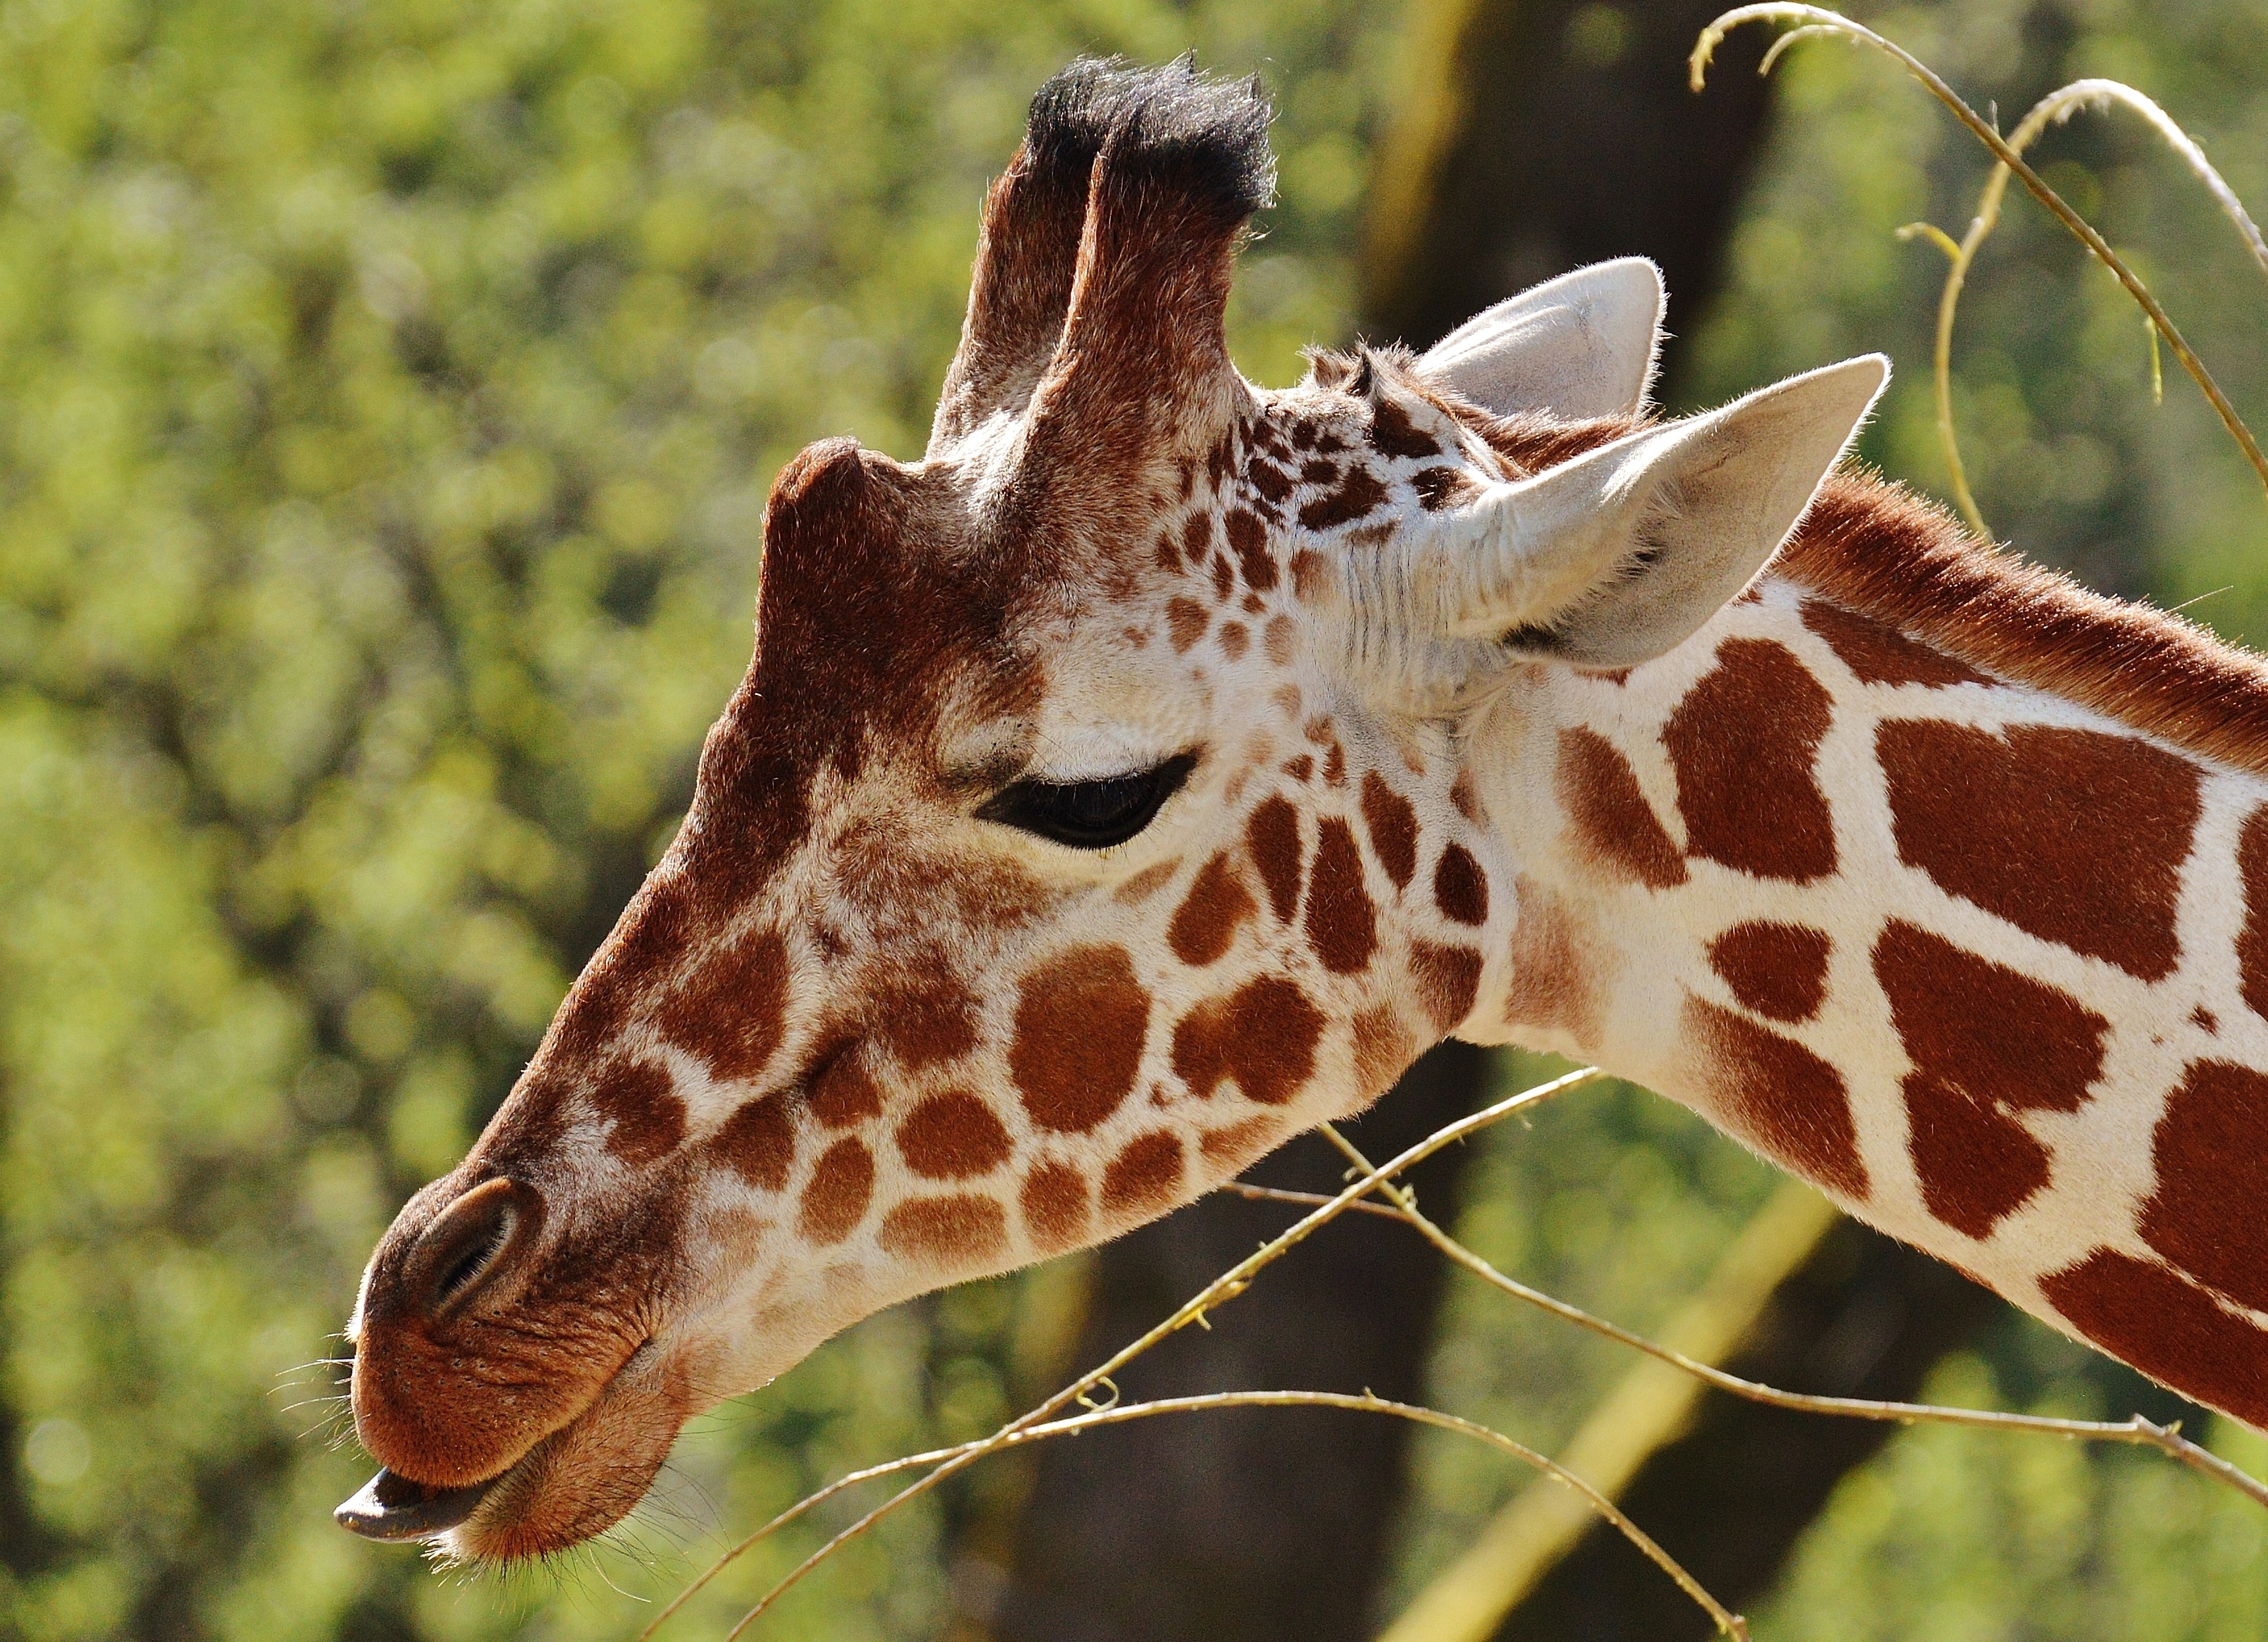 Giraffe Zoo head portrait free image